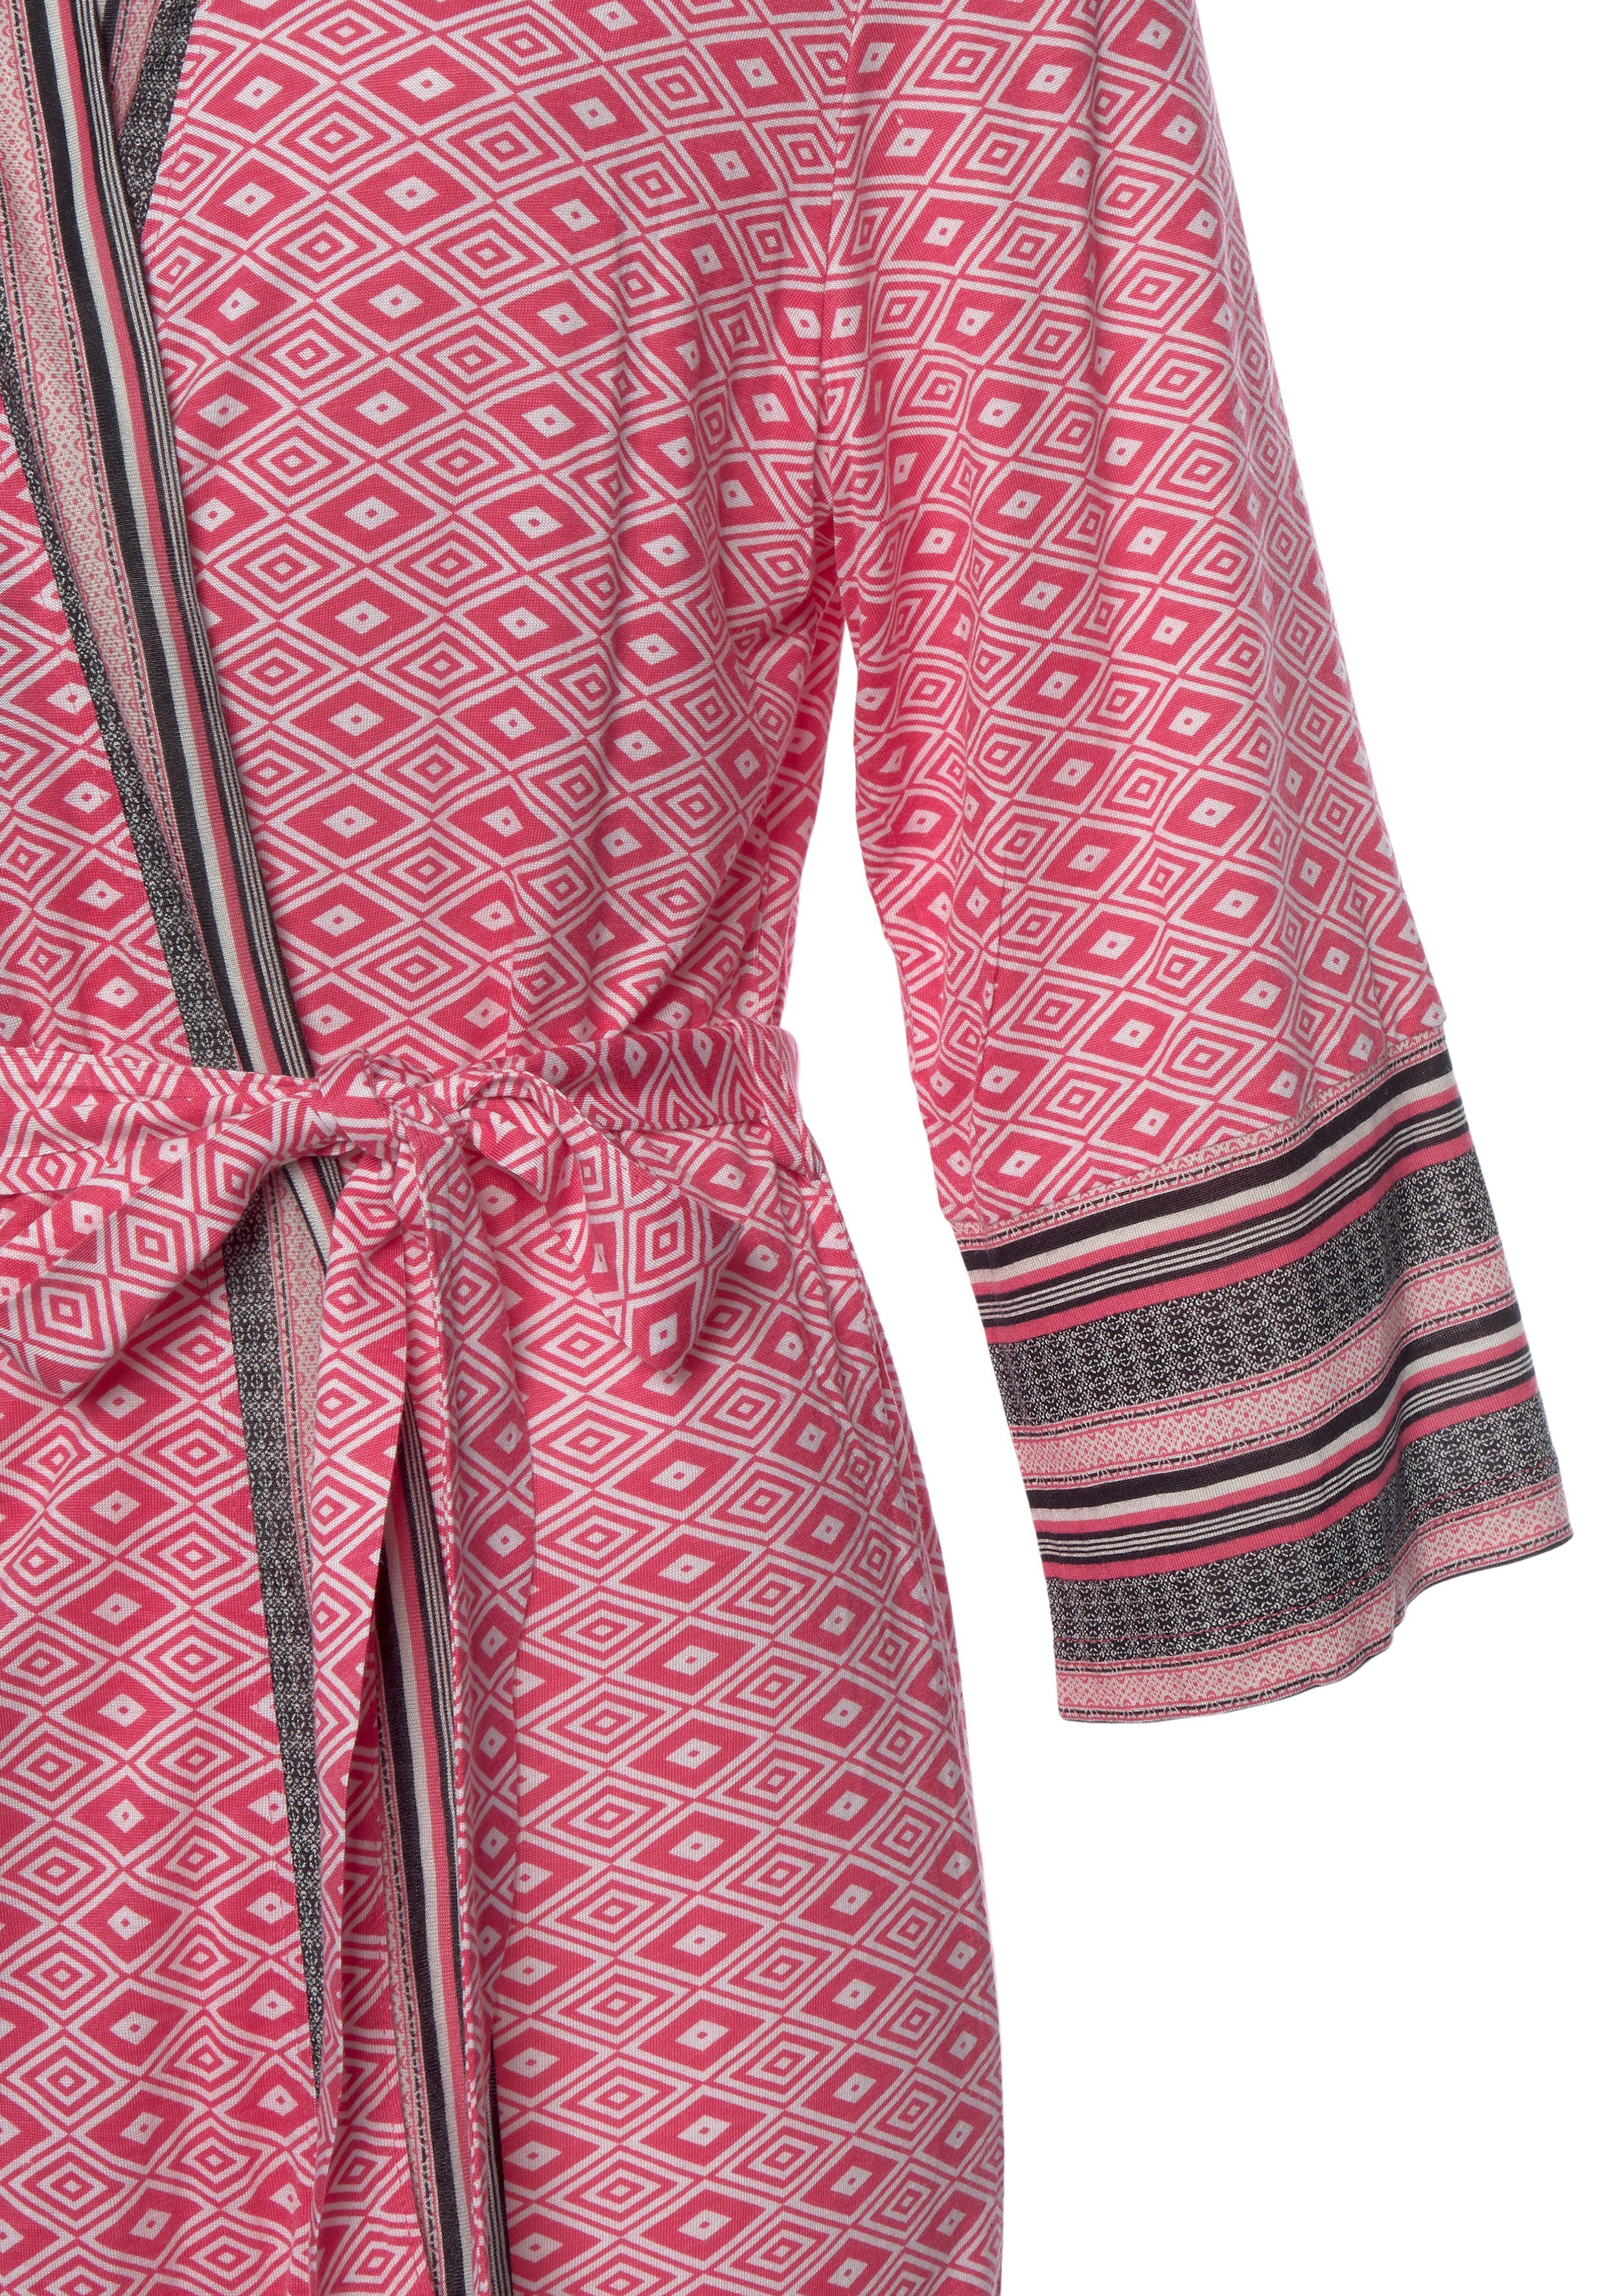 Kurzform, in Ethno-Design Single-Jersey, pink gemustert Vivance Kimono-Kragen, Kimono, schönem Dreams Gürtel,